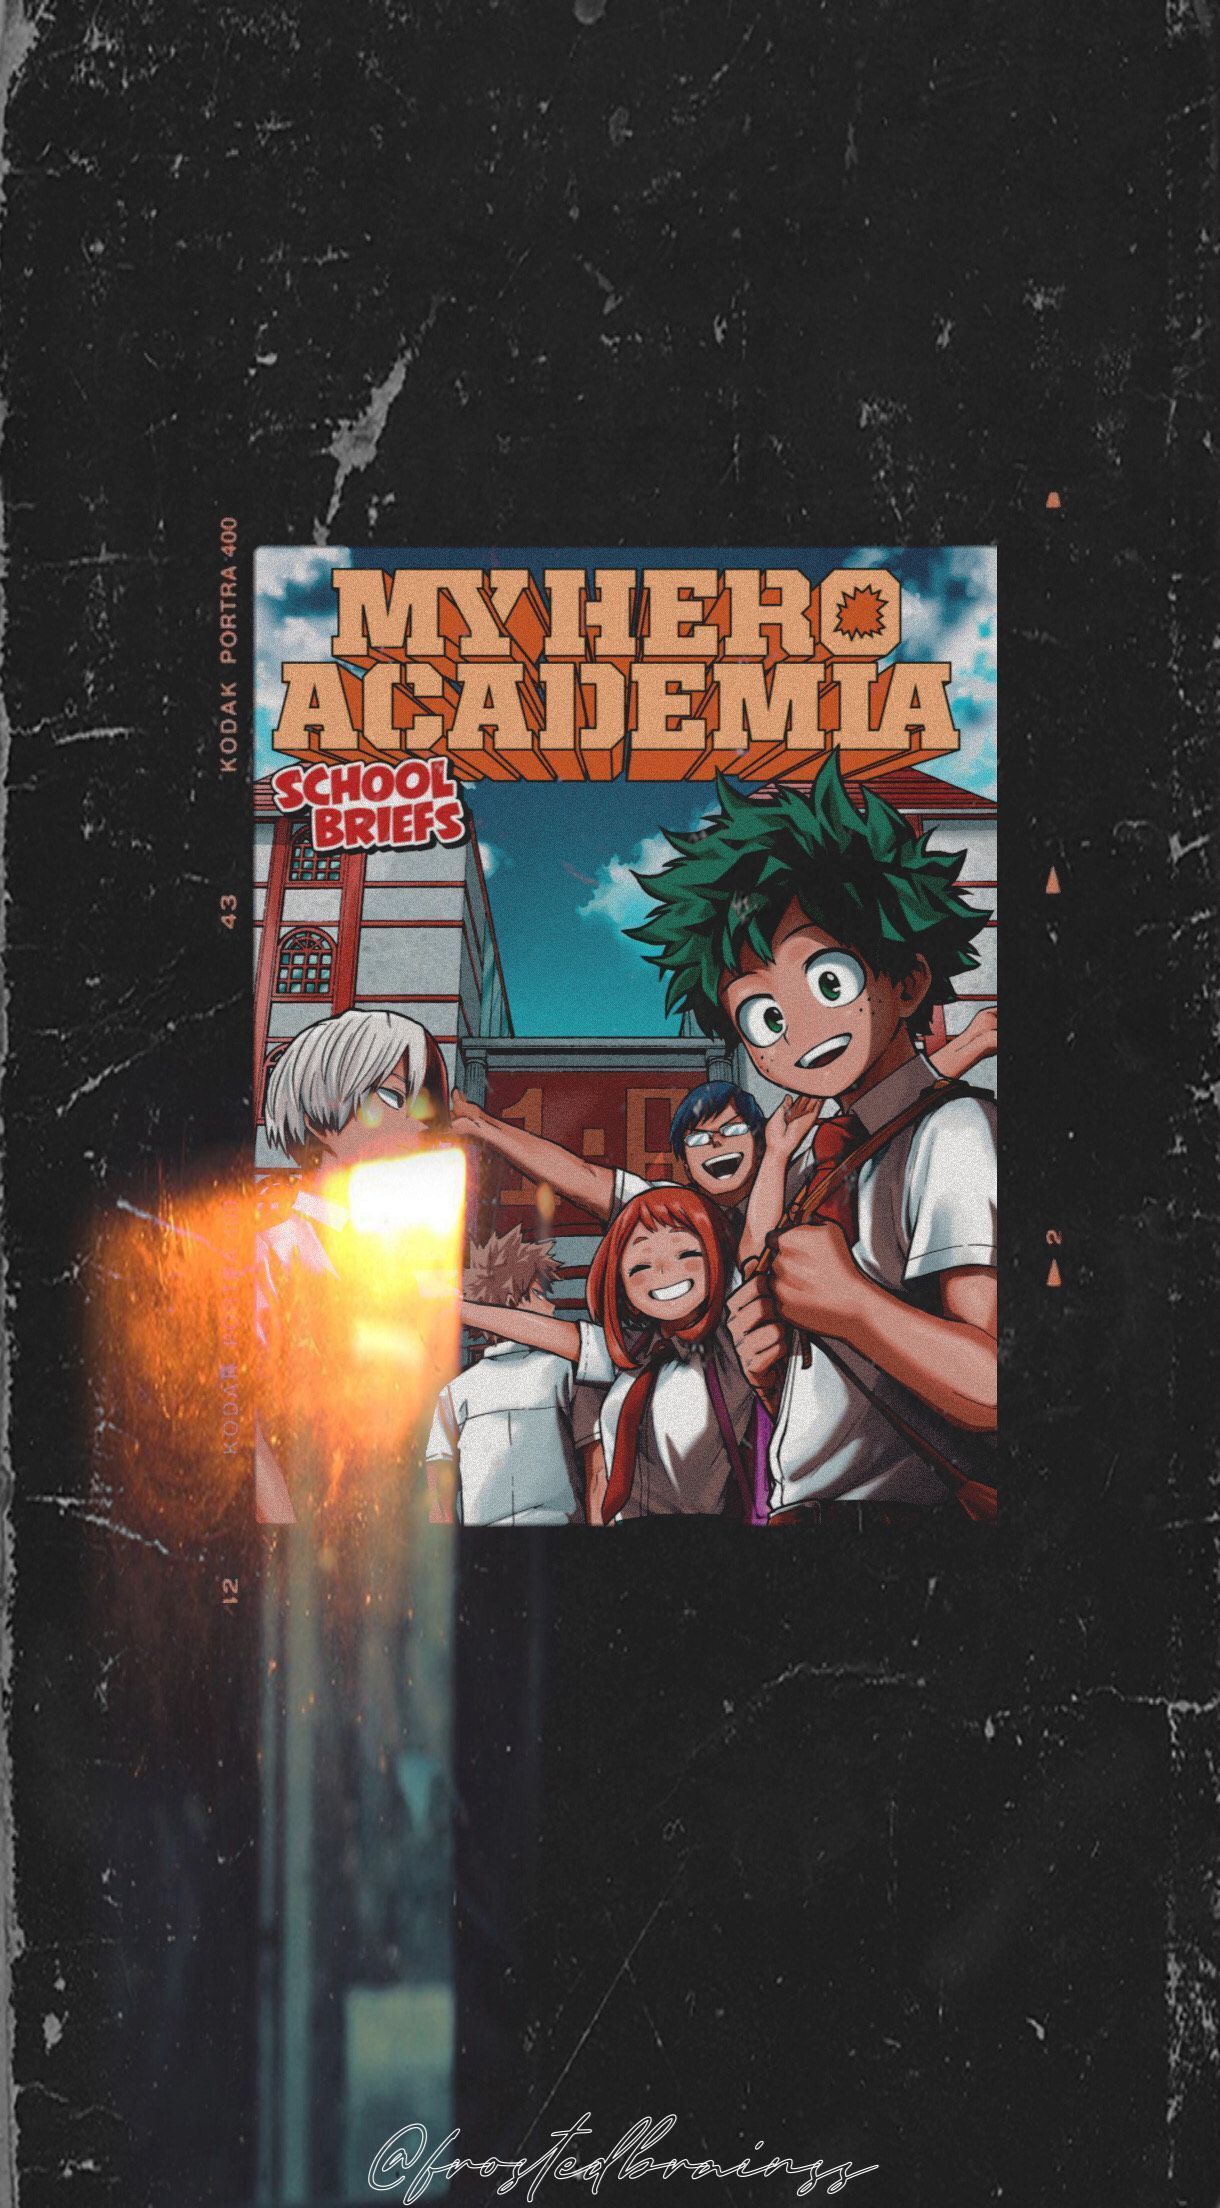 My hero academia wallpaper phone background aesthetic anime - My Hero Academia